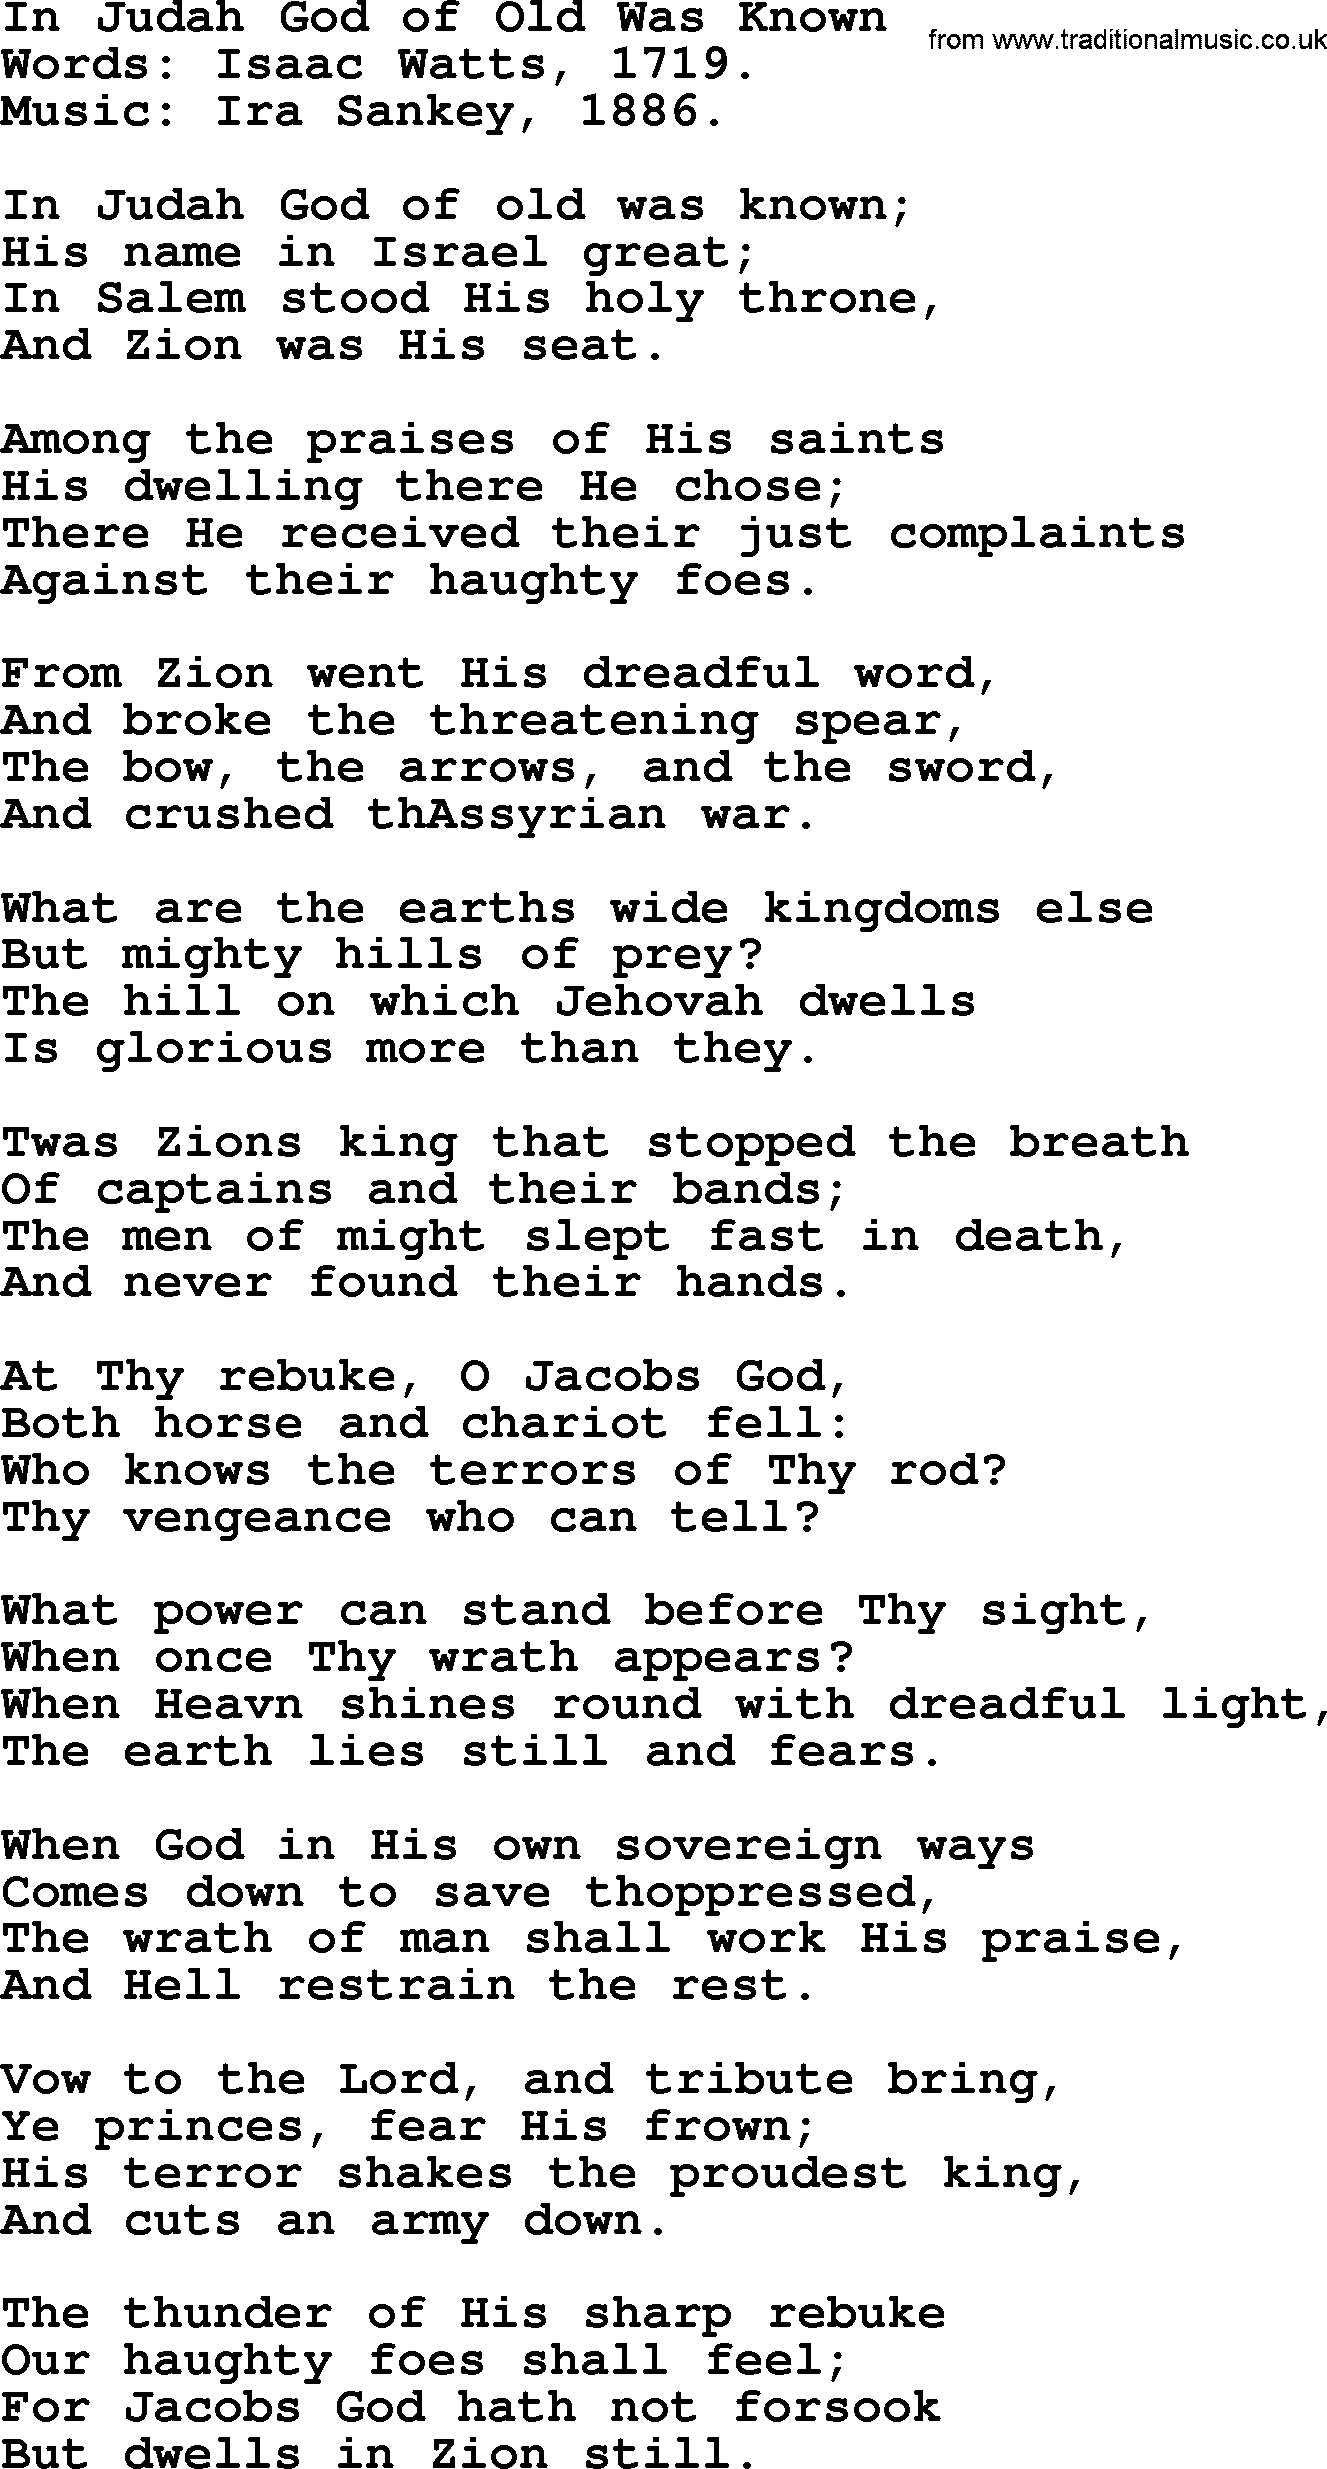 Isaac Watts Christian hymn: In Judah God of Old Was Known- lyricss